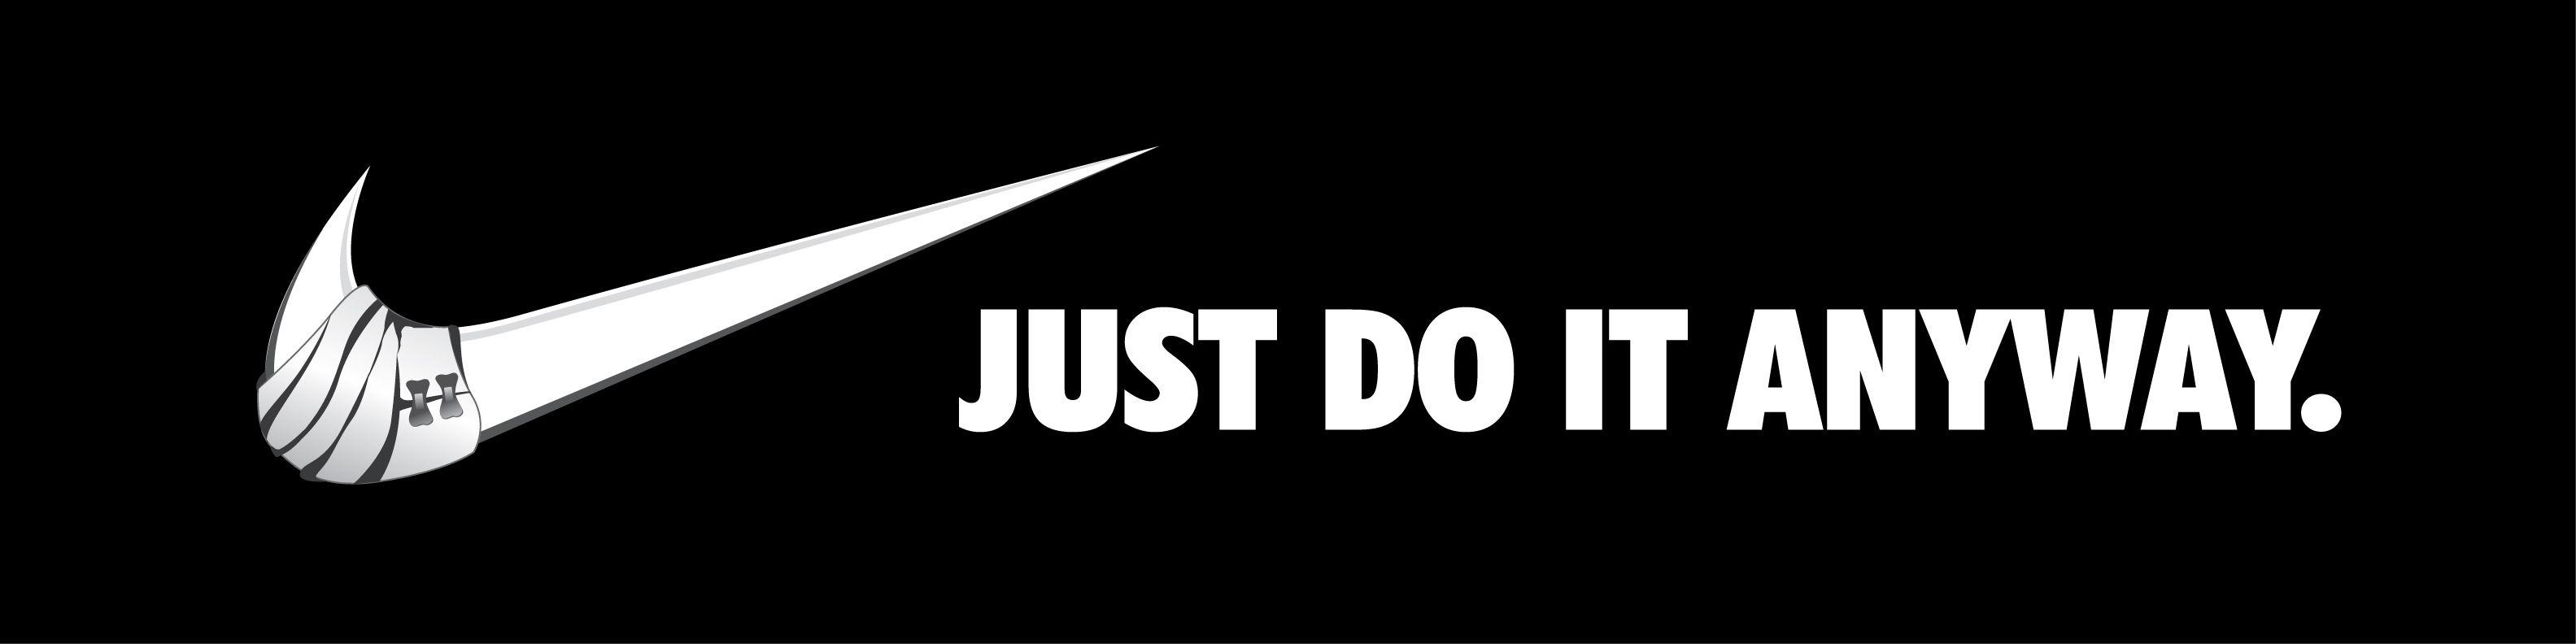 llanody: Nike Logo Just Do It